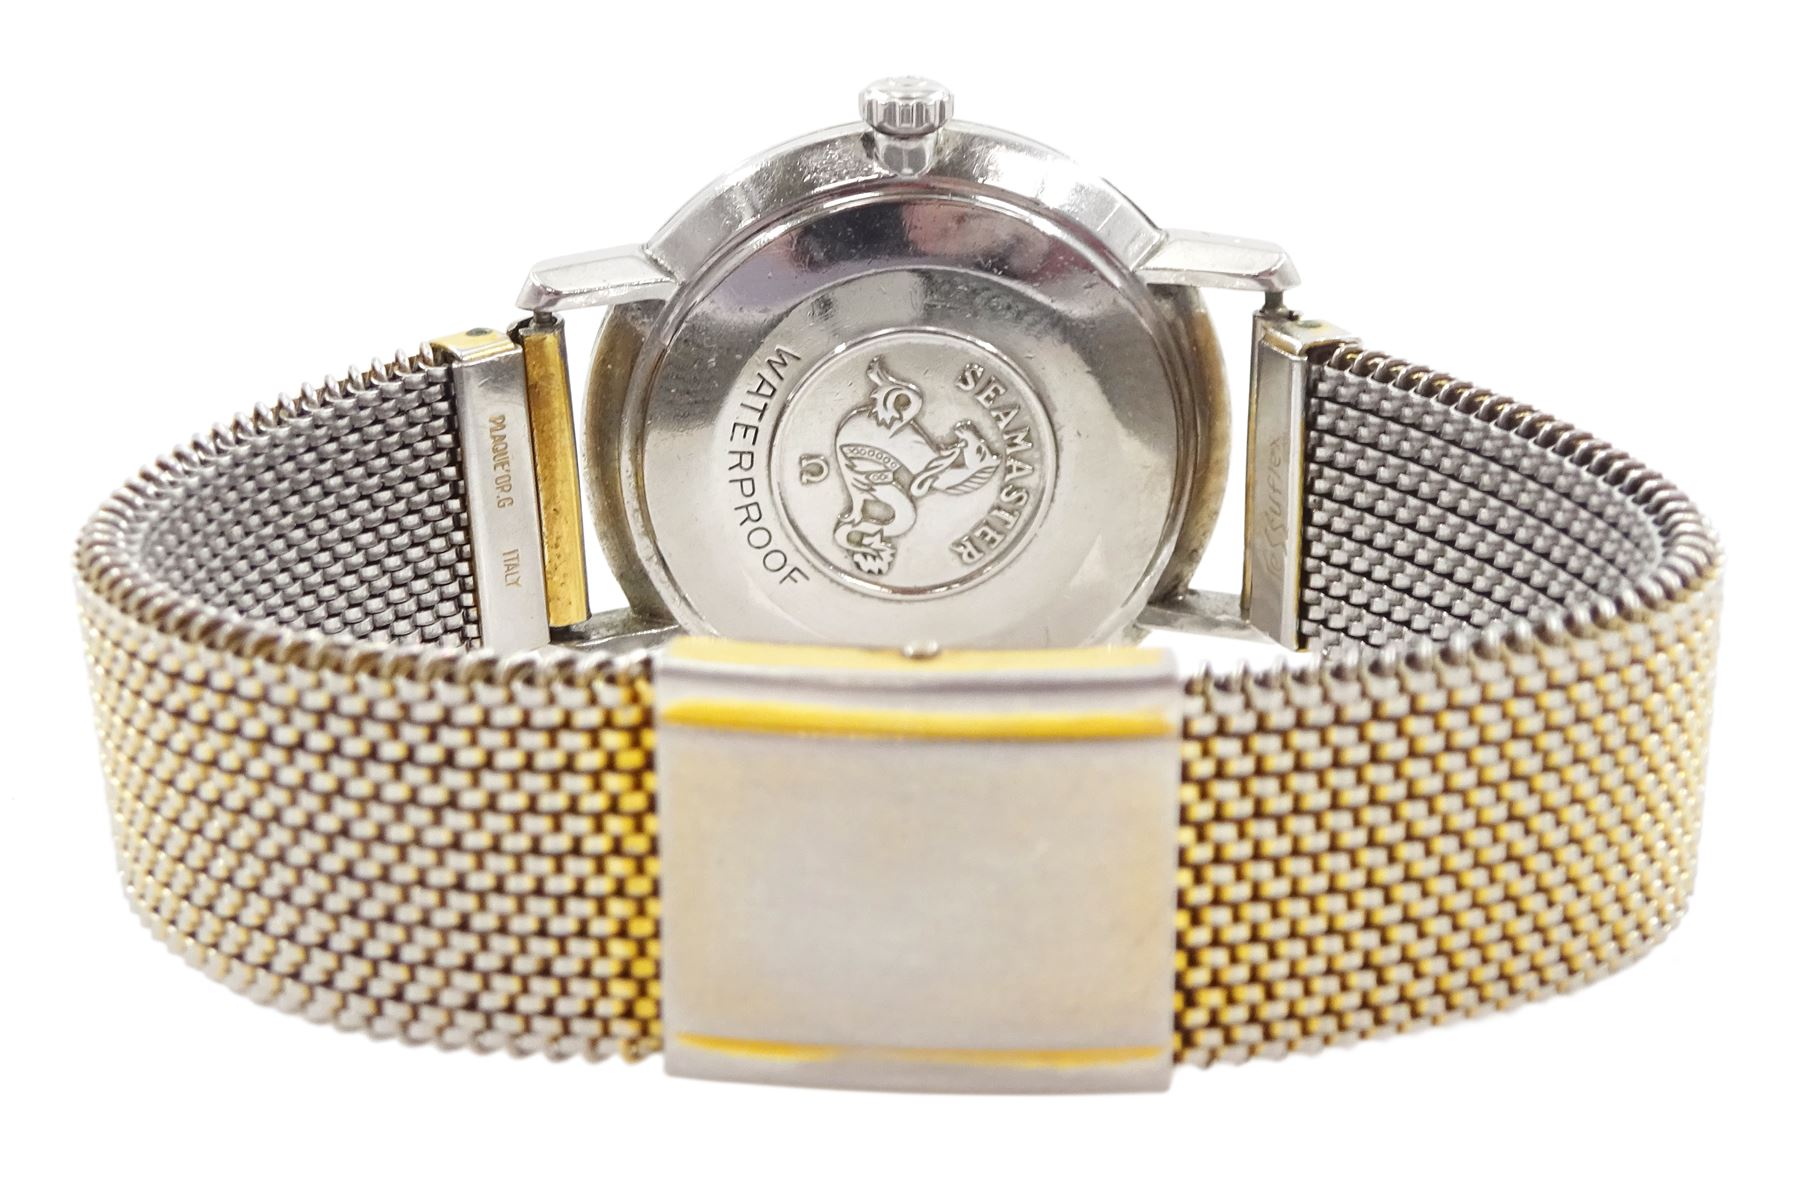 Omega Seamaster De Ville gentleman's stainless steel manual wind wristwatch - Image 2 of 3